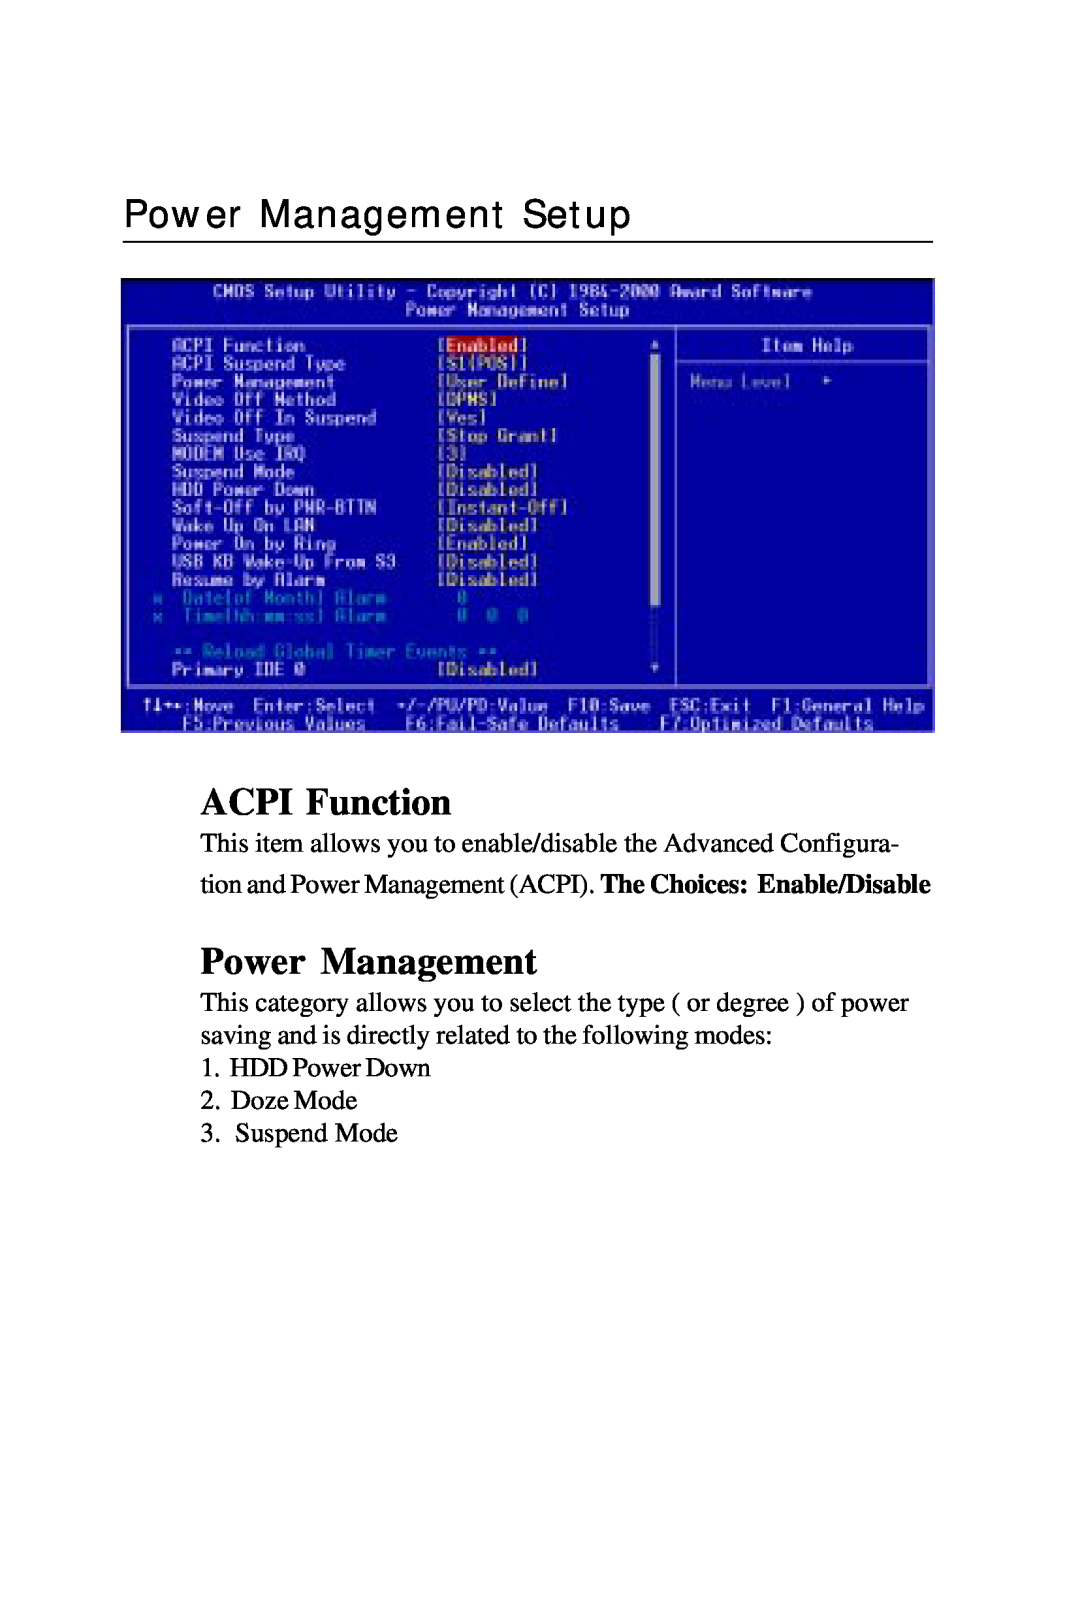 Intel PCM-6896 manual Power Management Setup, ACPI Function 